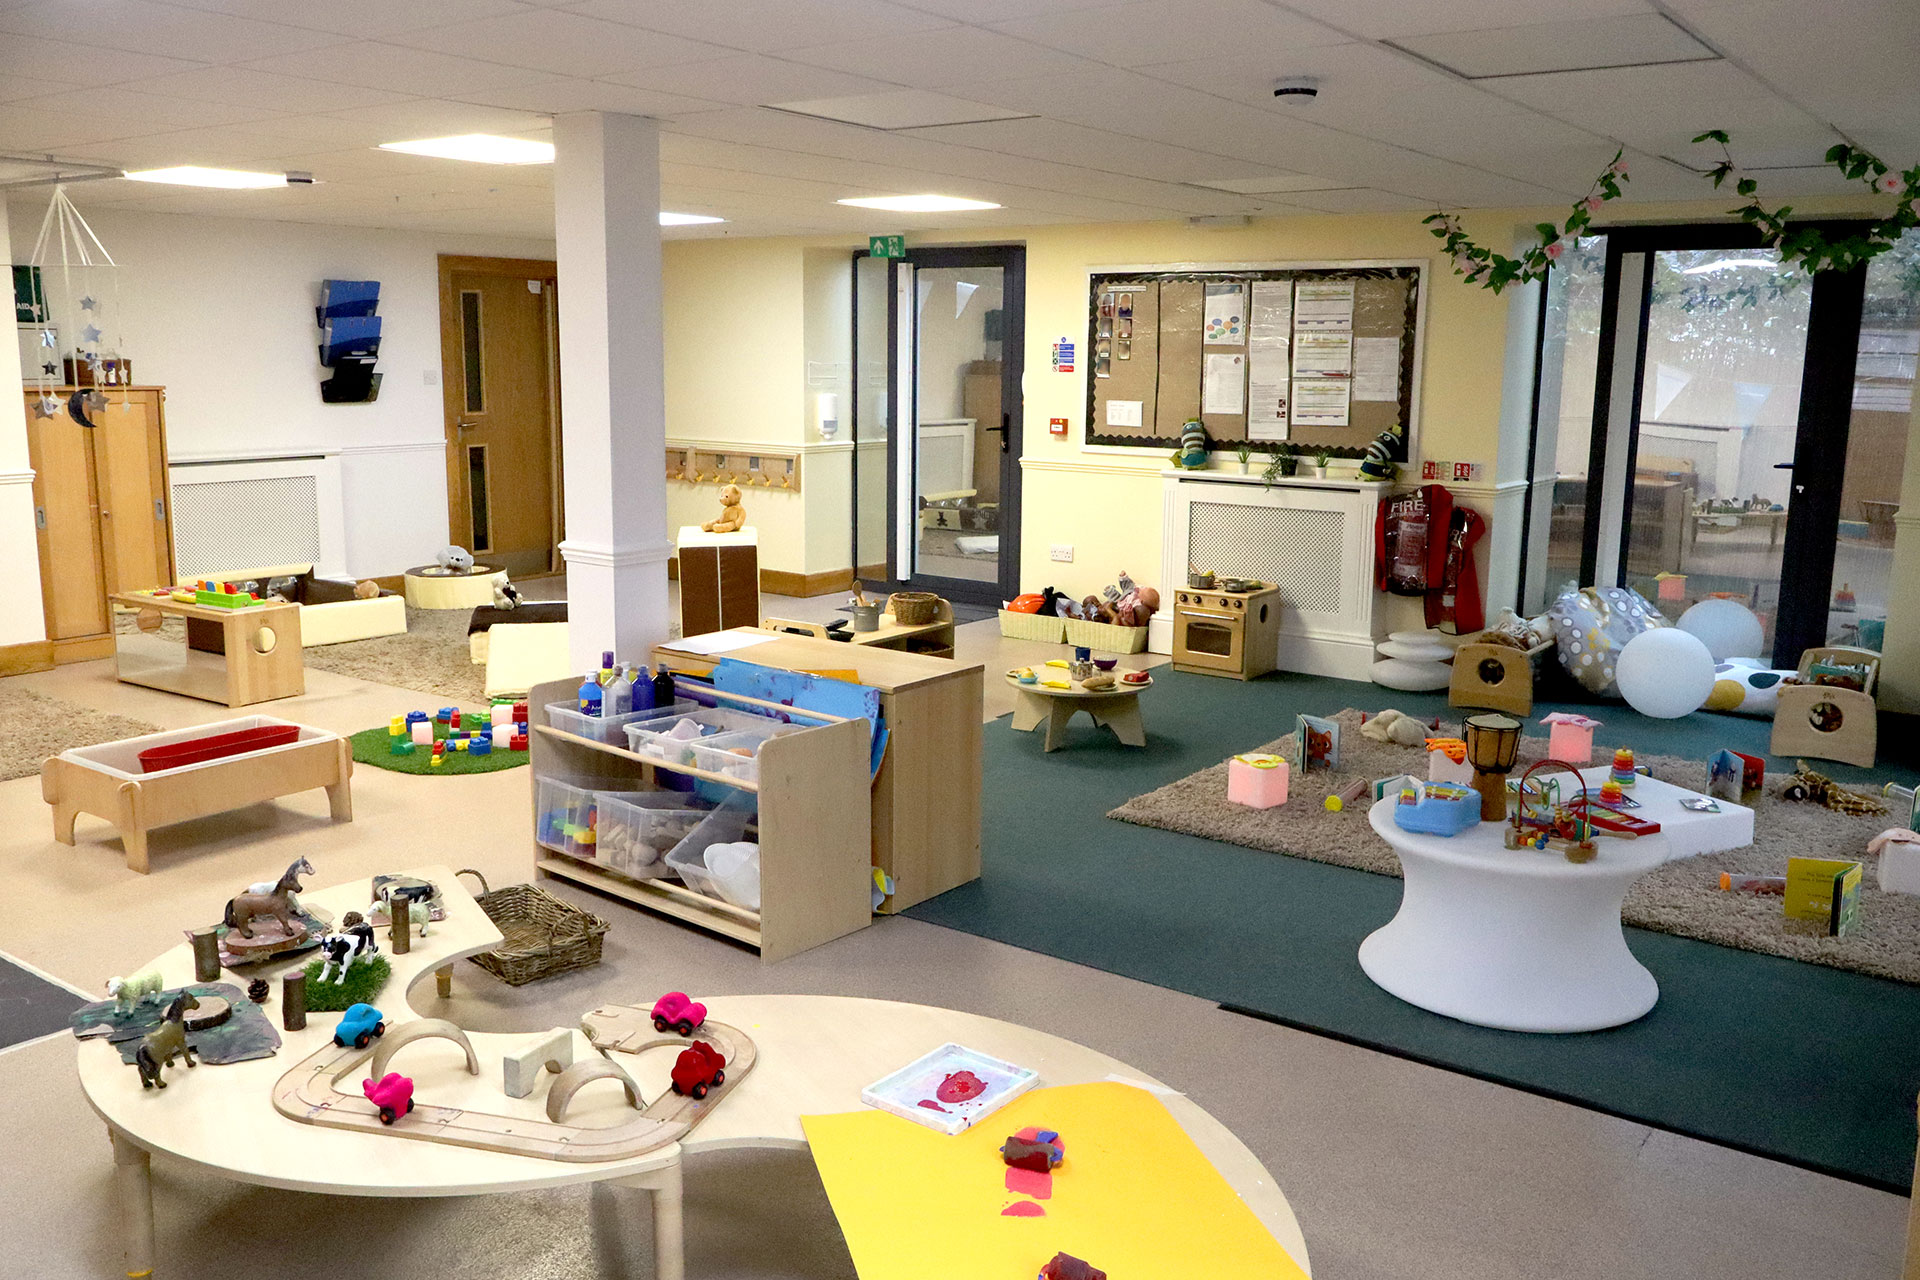 Chantry Hall Day Nursery and Preschool